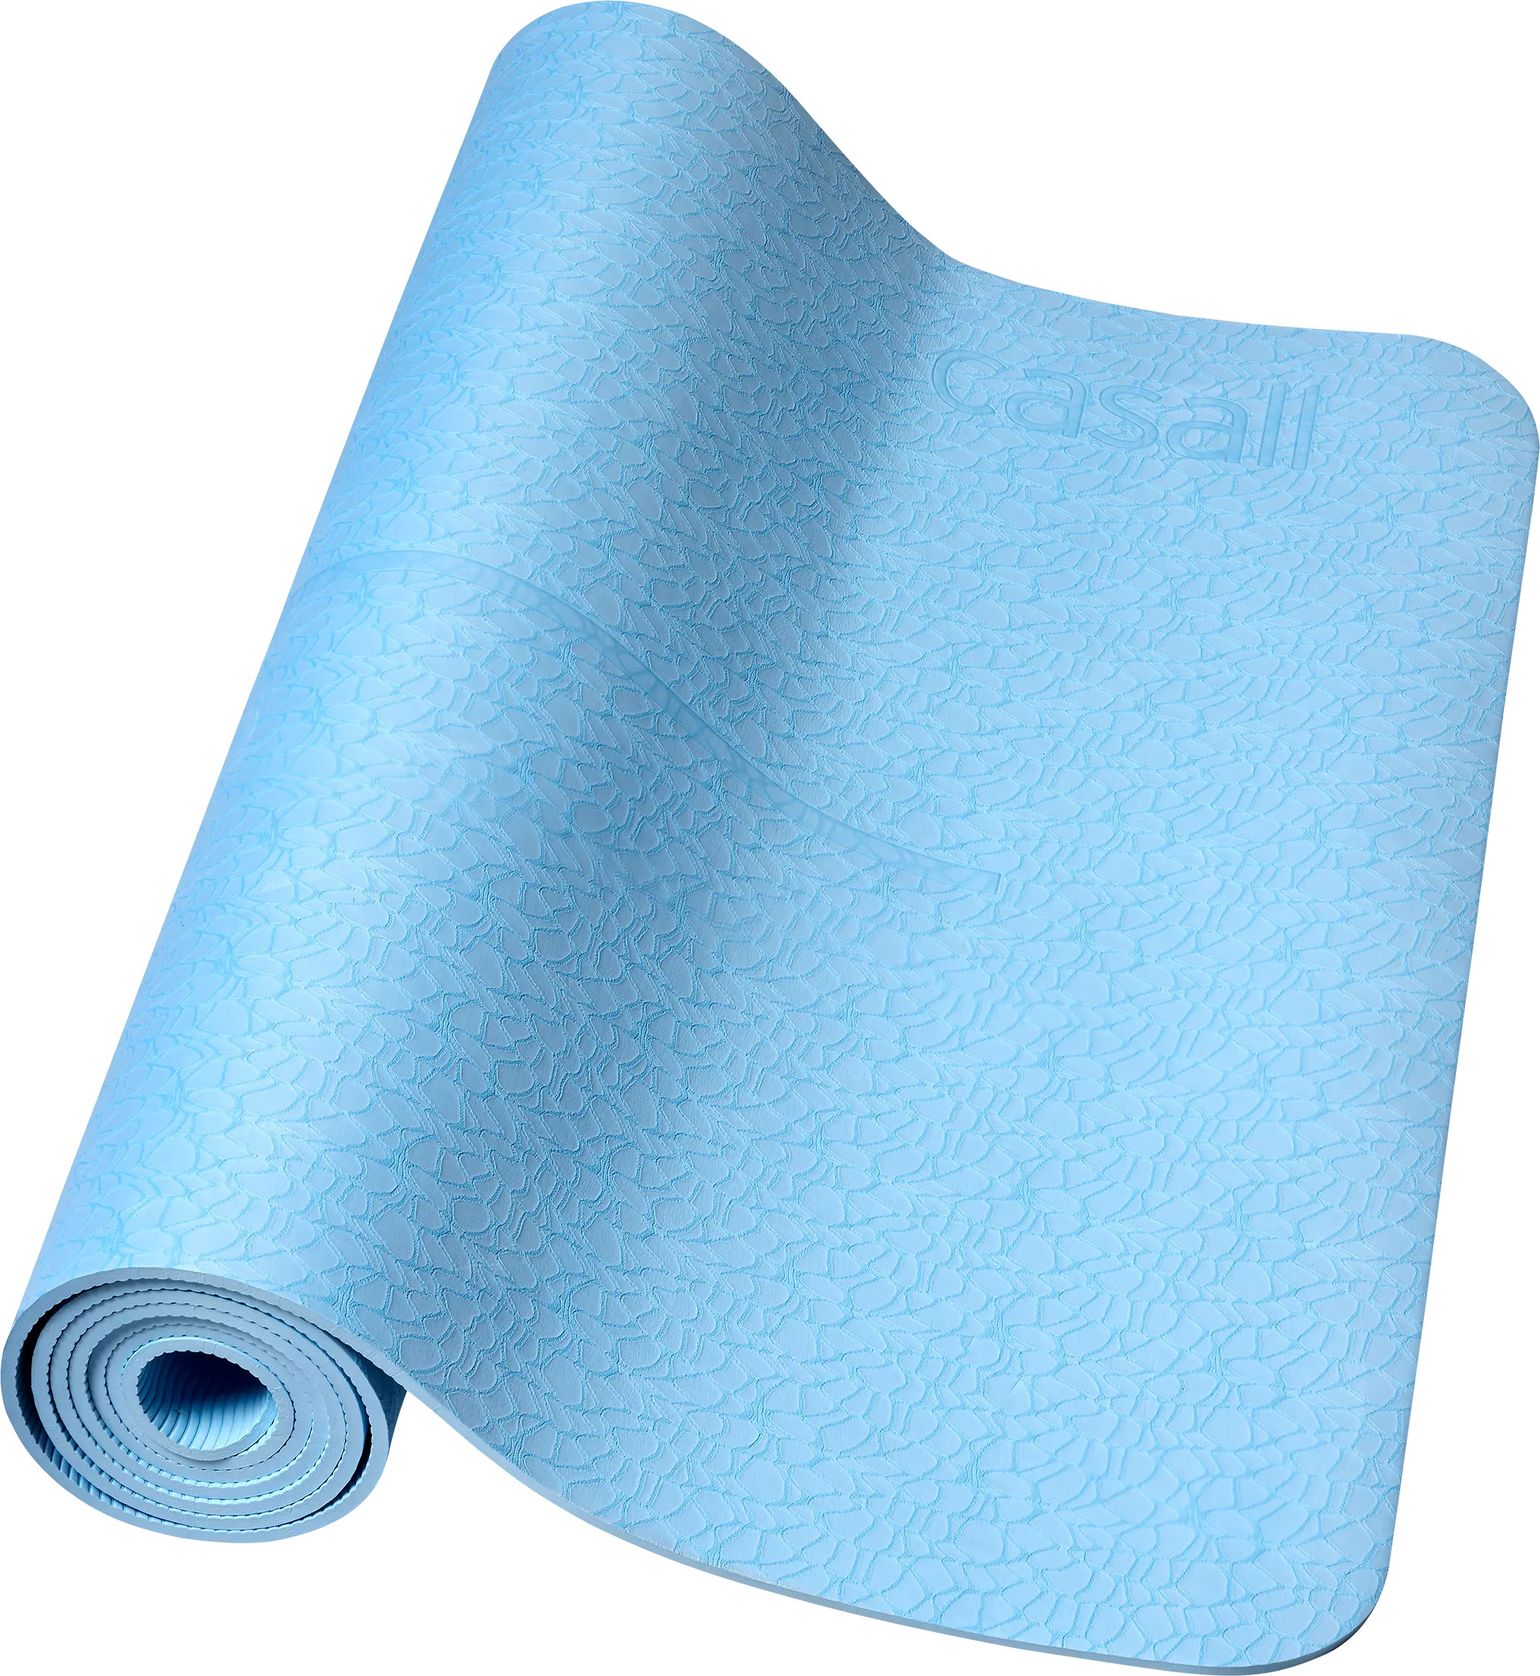 Casall Exercise Mat Cushion 5mm PVC Free Sky Blue